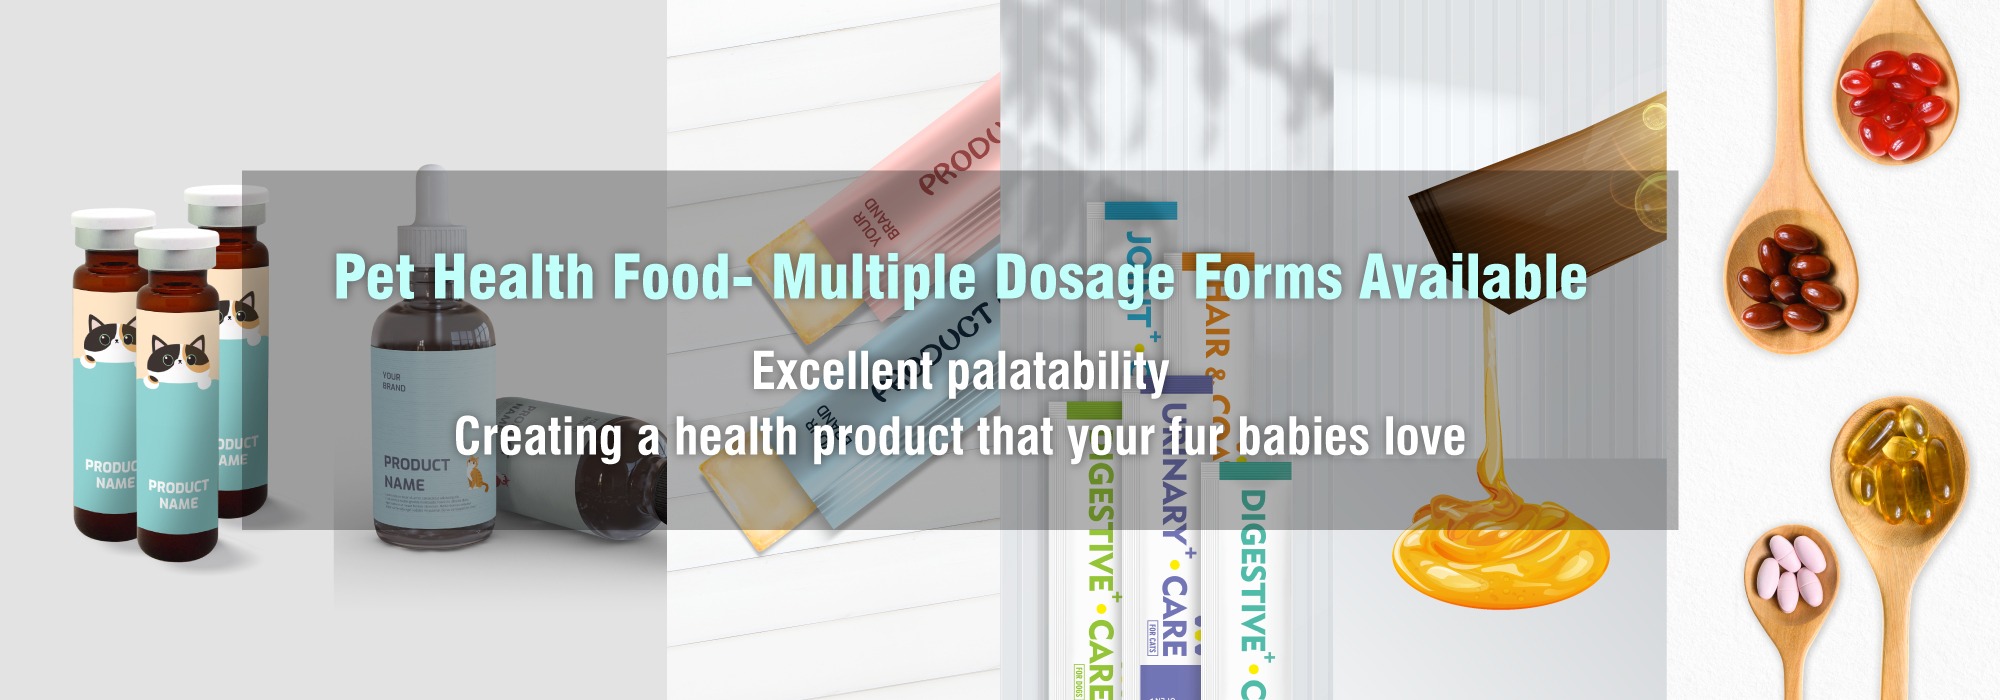 wel-pet Pet Health Food- Multiple Dosage Forms Ava